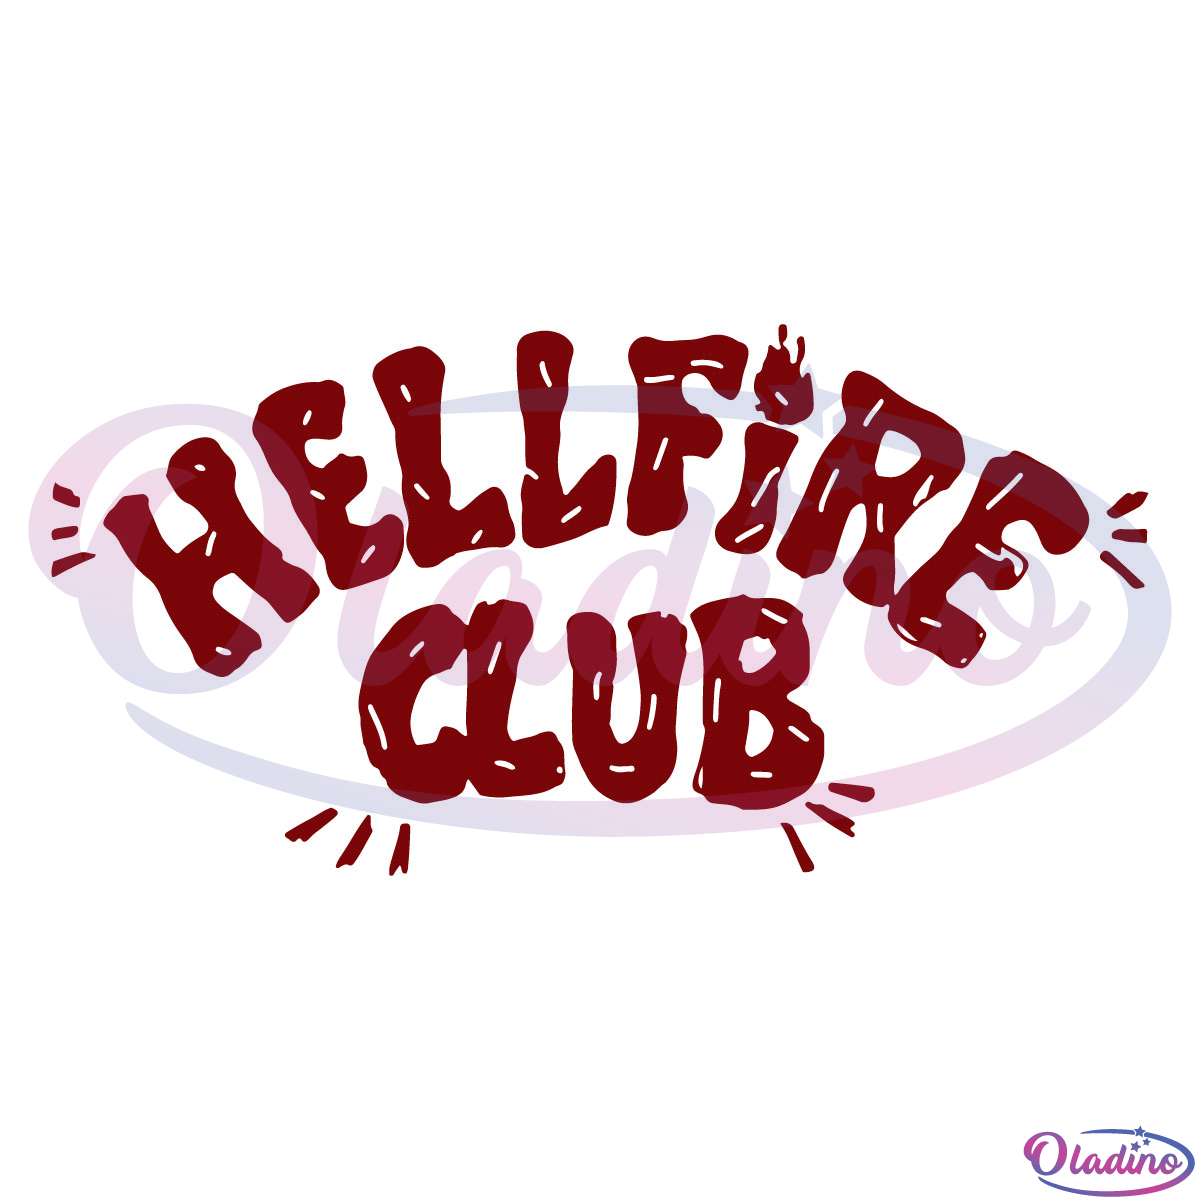 Hellfire Club Stranger Things 4 SVG, Science Fiction Horror